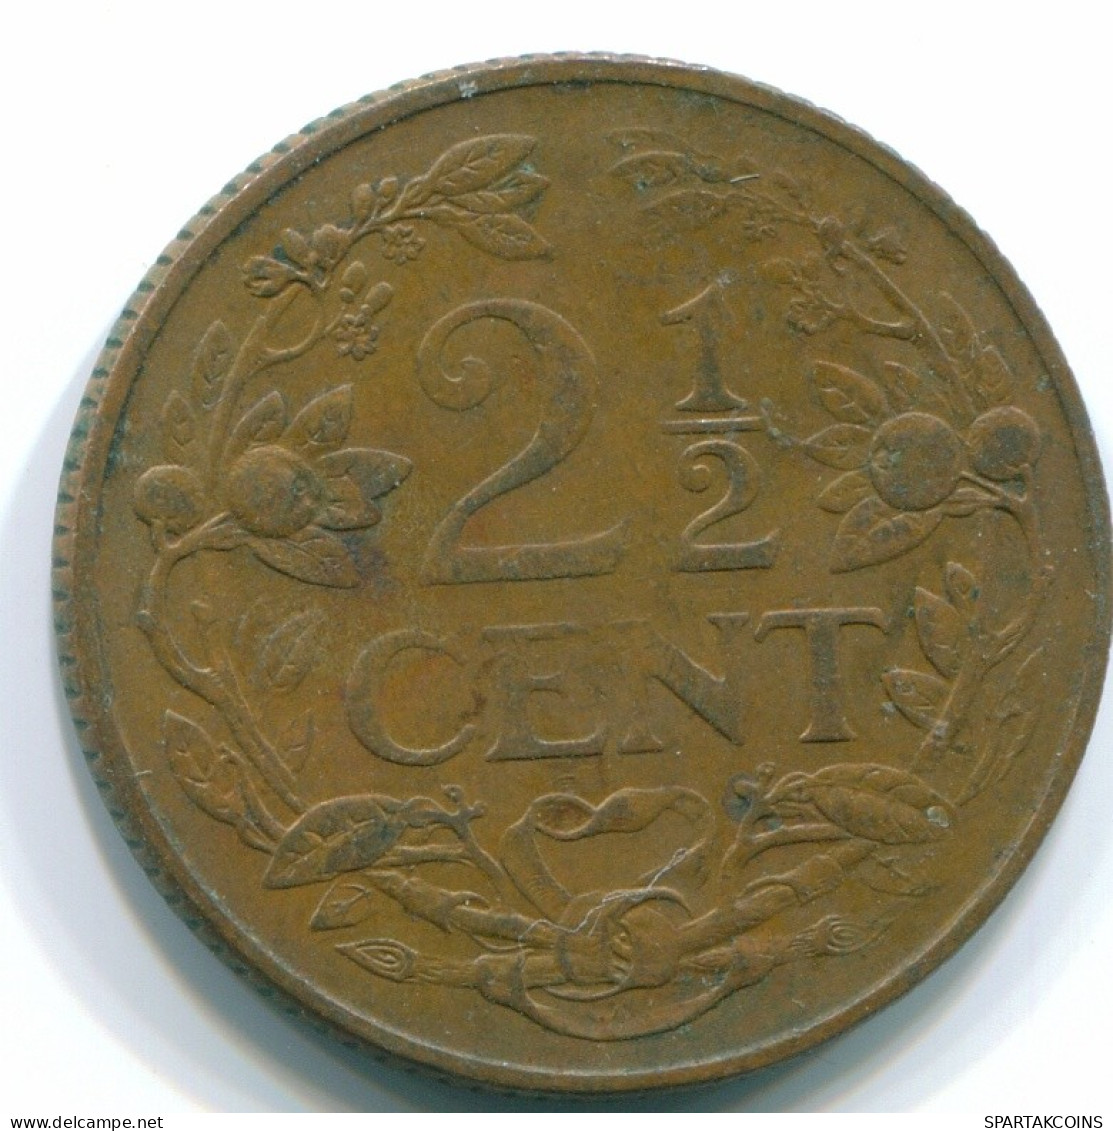 2 1/2 CENT 1965 CURACAO Netherlands Bronze Colonial Coin #S10198.U.A - Curaçao